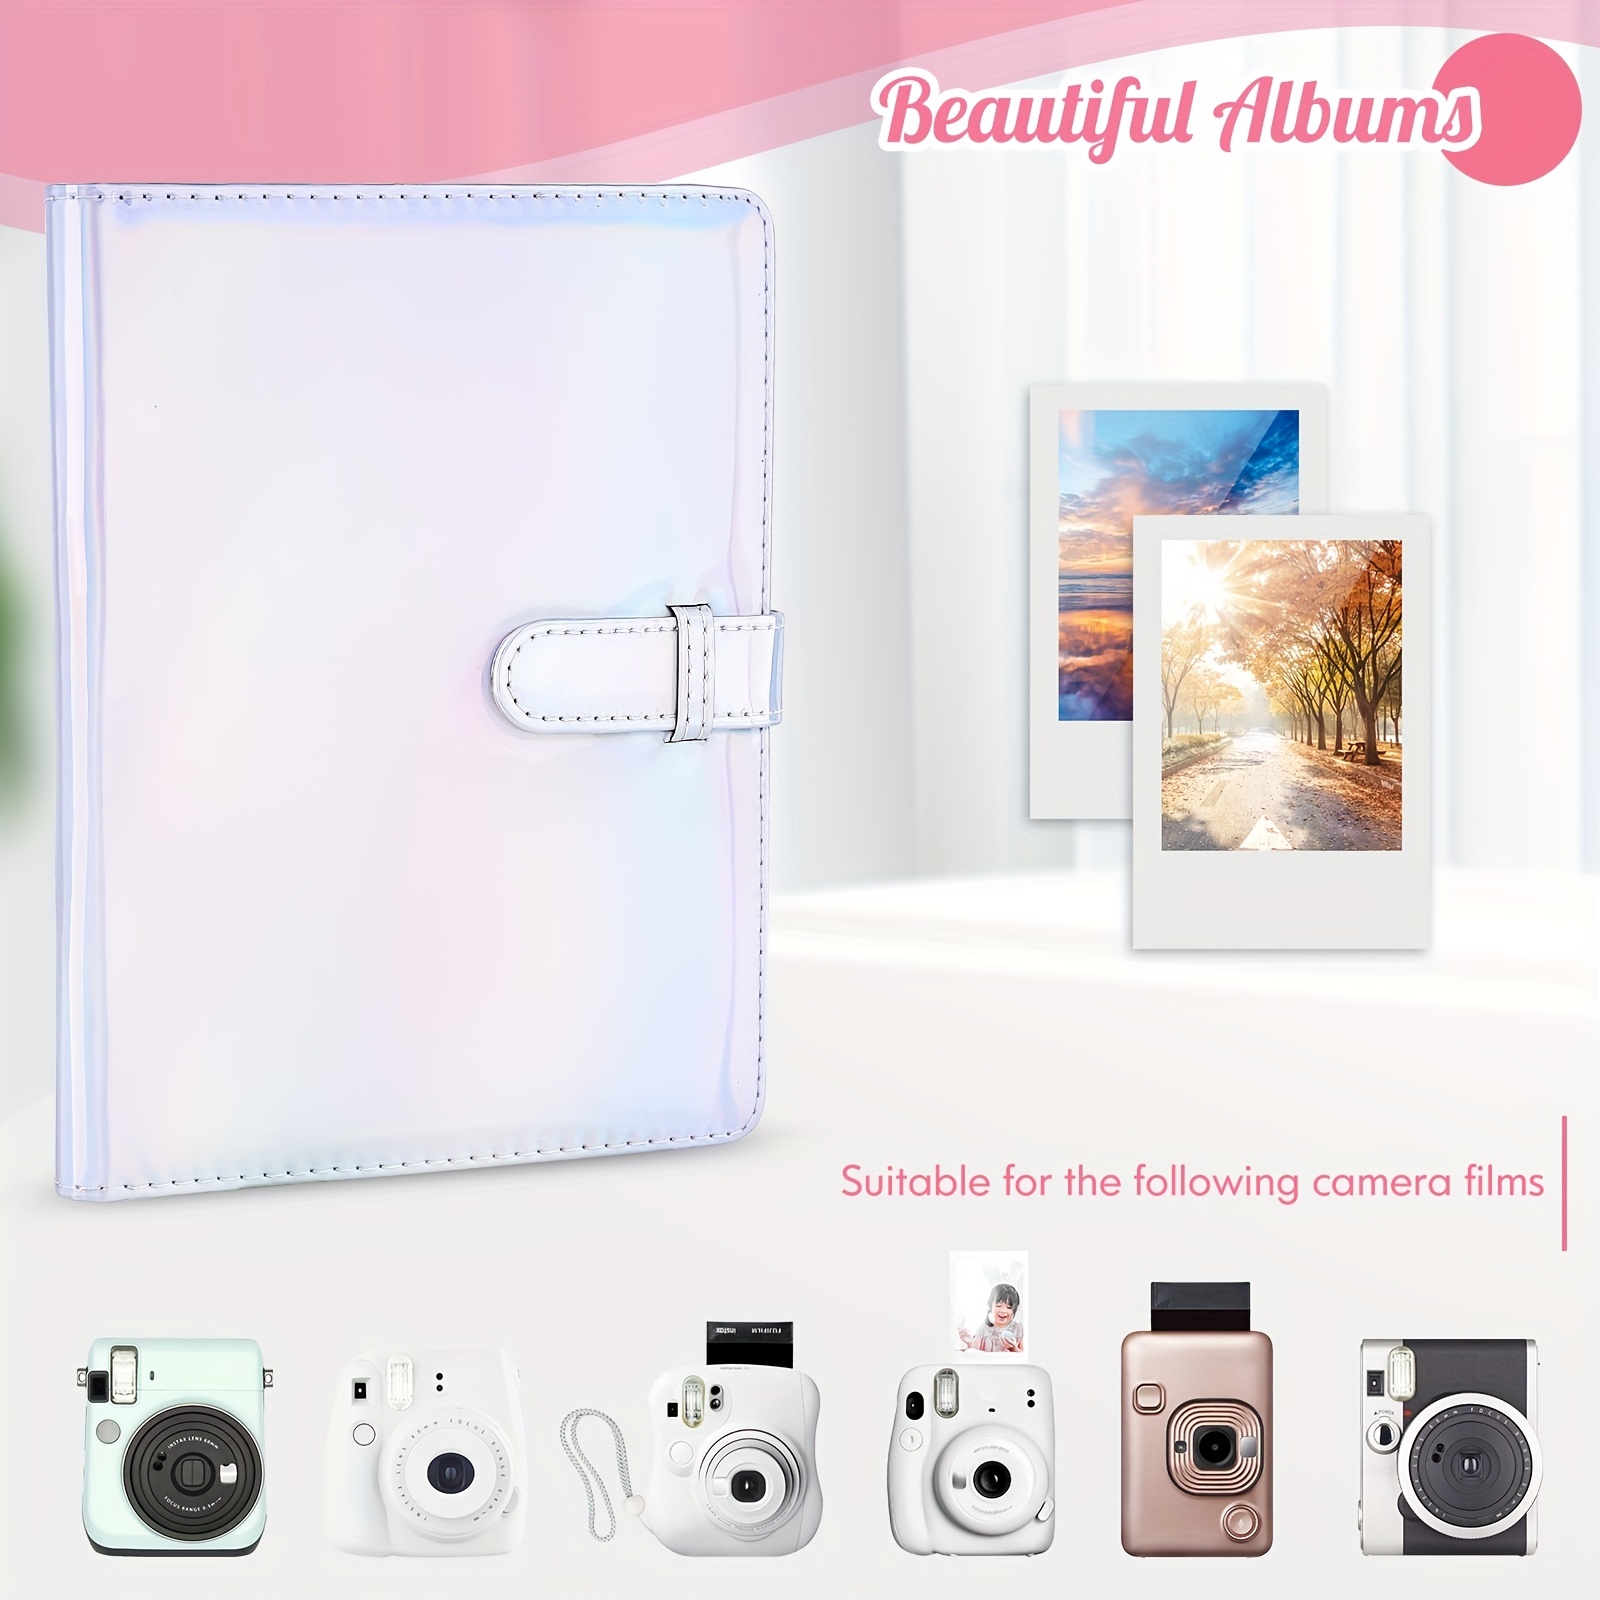 Buy 256 Pockets Polaroid Photo Album Instax Mini Photo Album